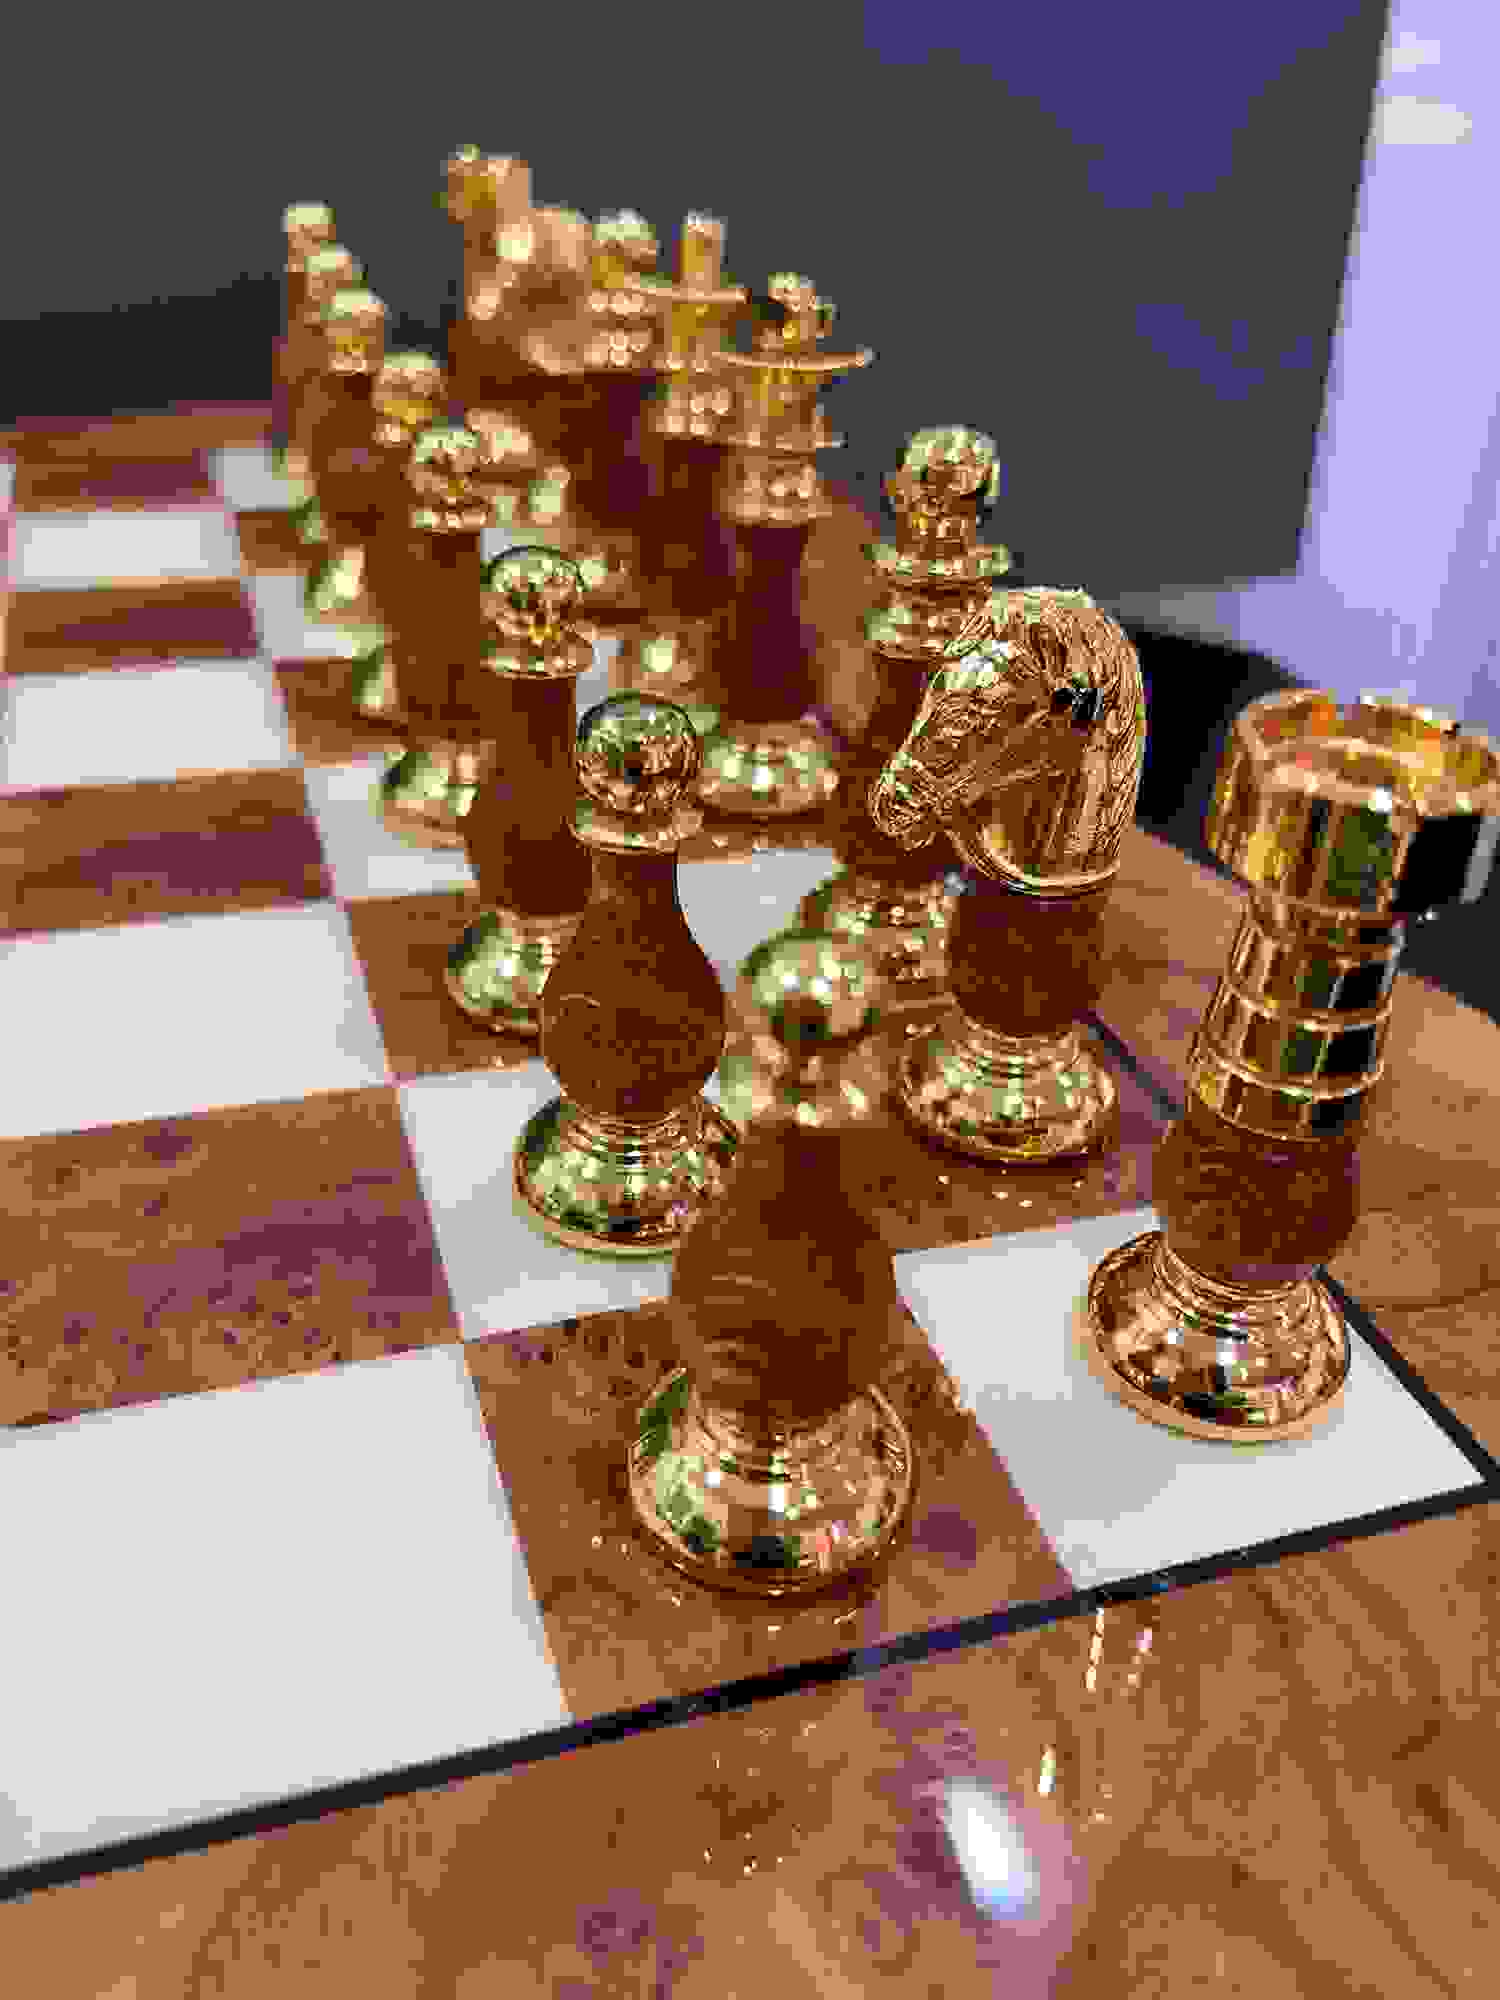 Italfama Chess Set Briar Wood 337OLP + 151GS